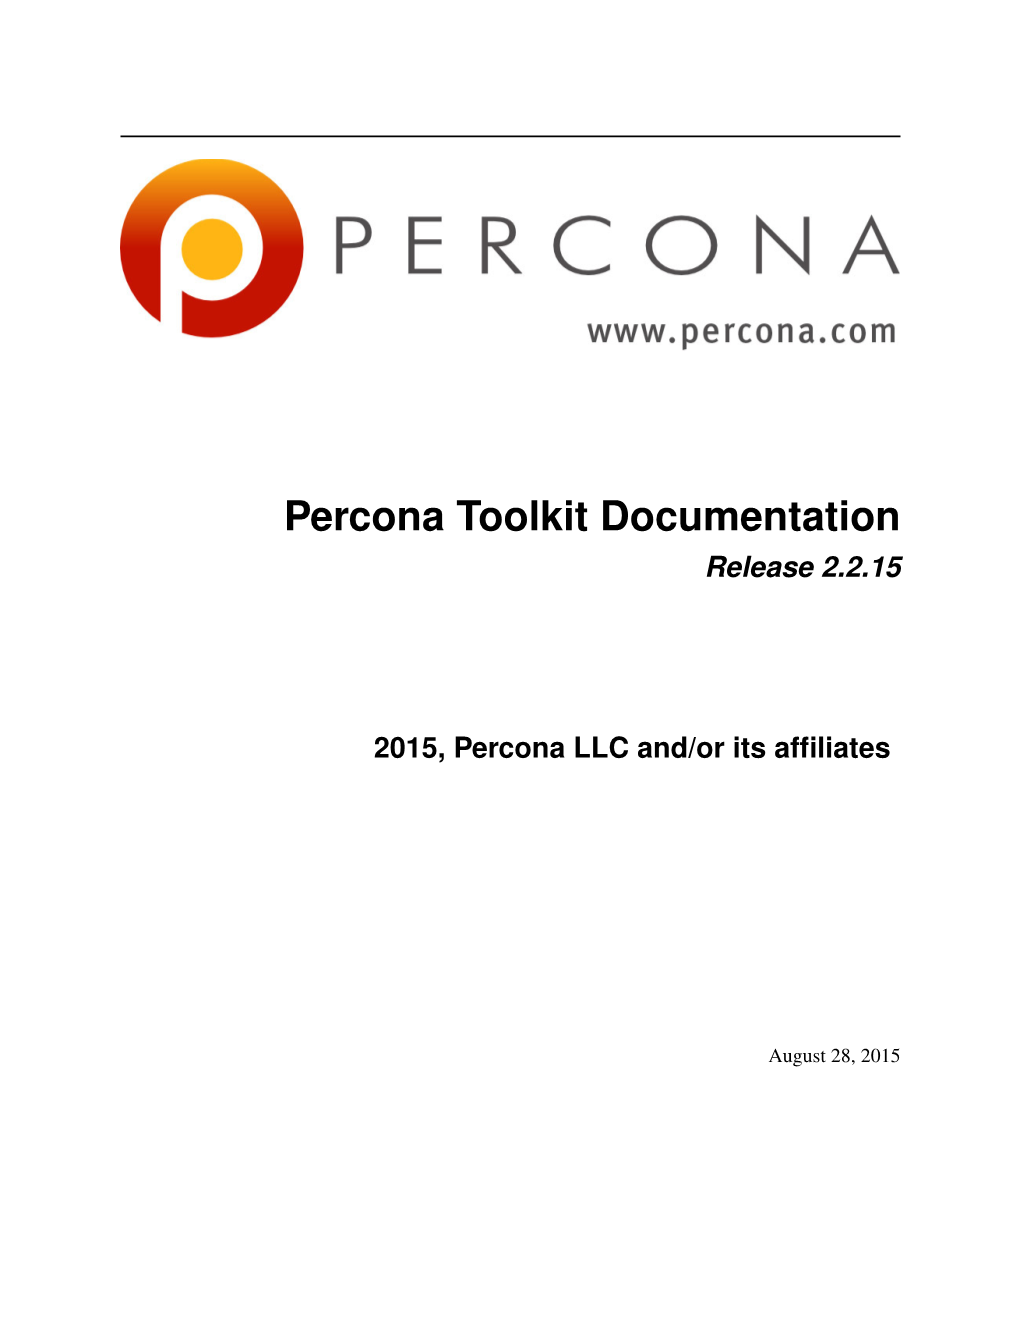 Percona Toolkit Documentation Release 2.2.15